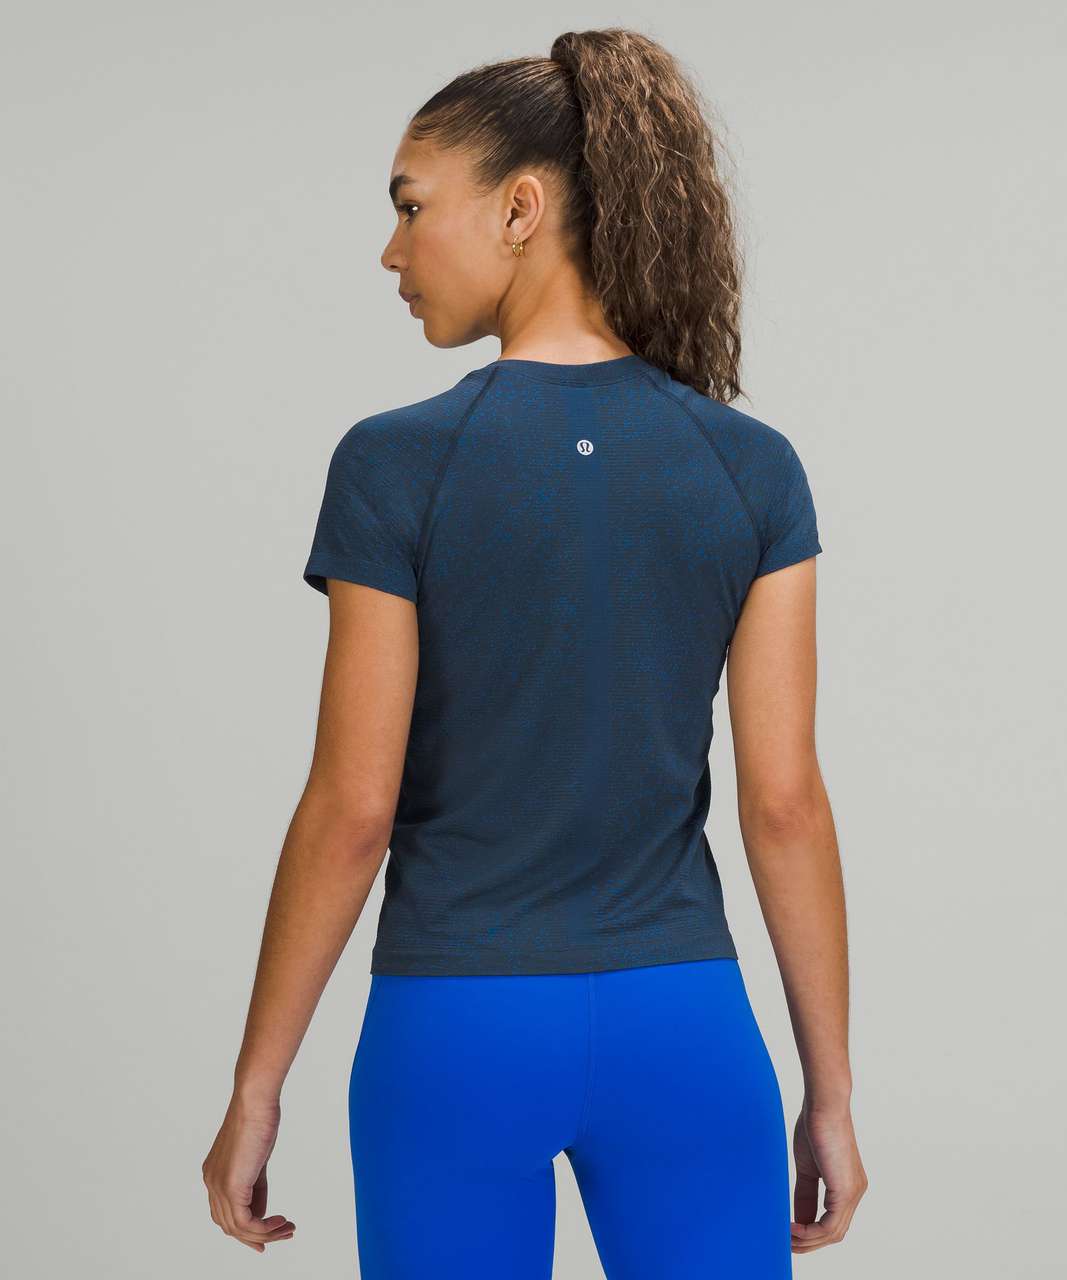 Lululemon Swiftly Tech Short Sleeve Shirt 2.0 *Race Length - Distorted Noise Mineral Blue / Blazer Blue Tone